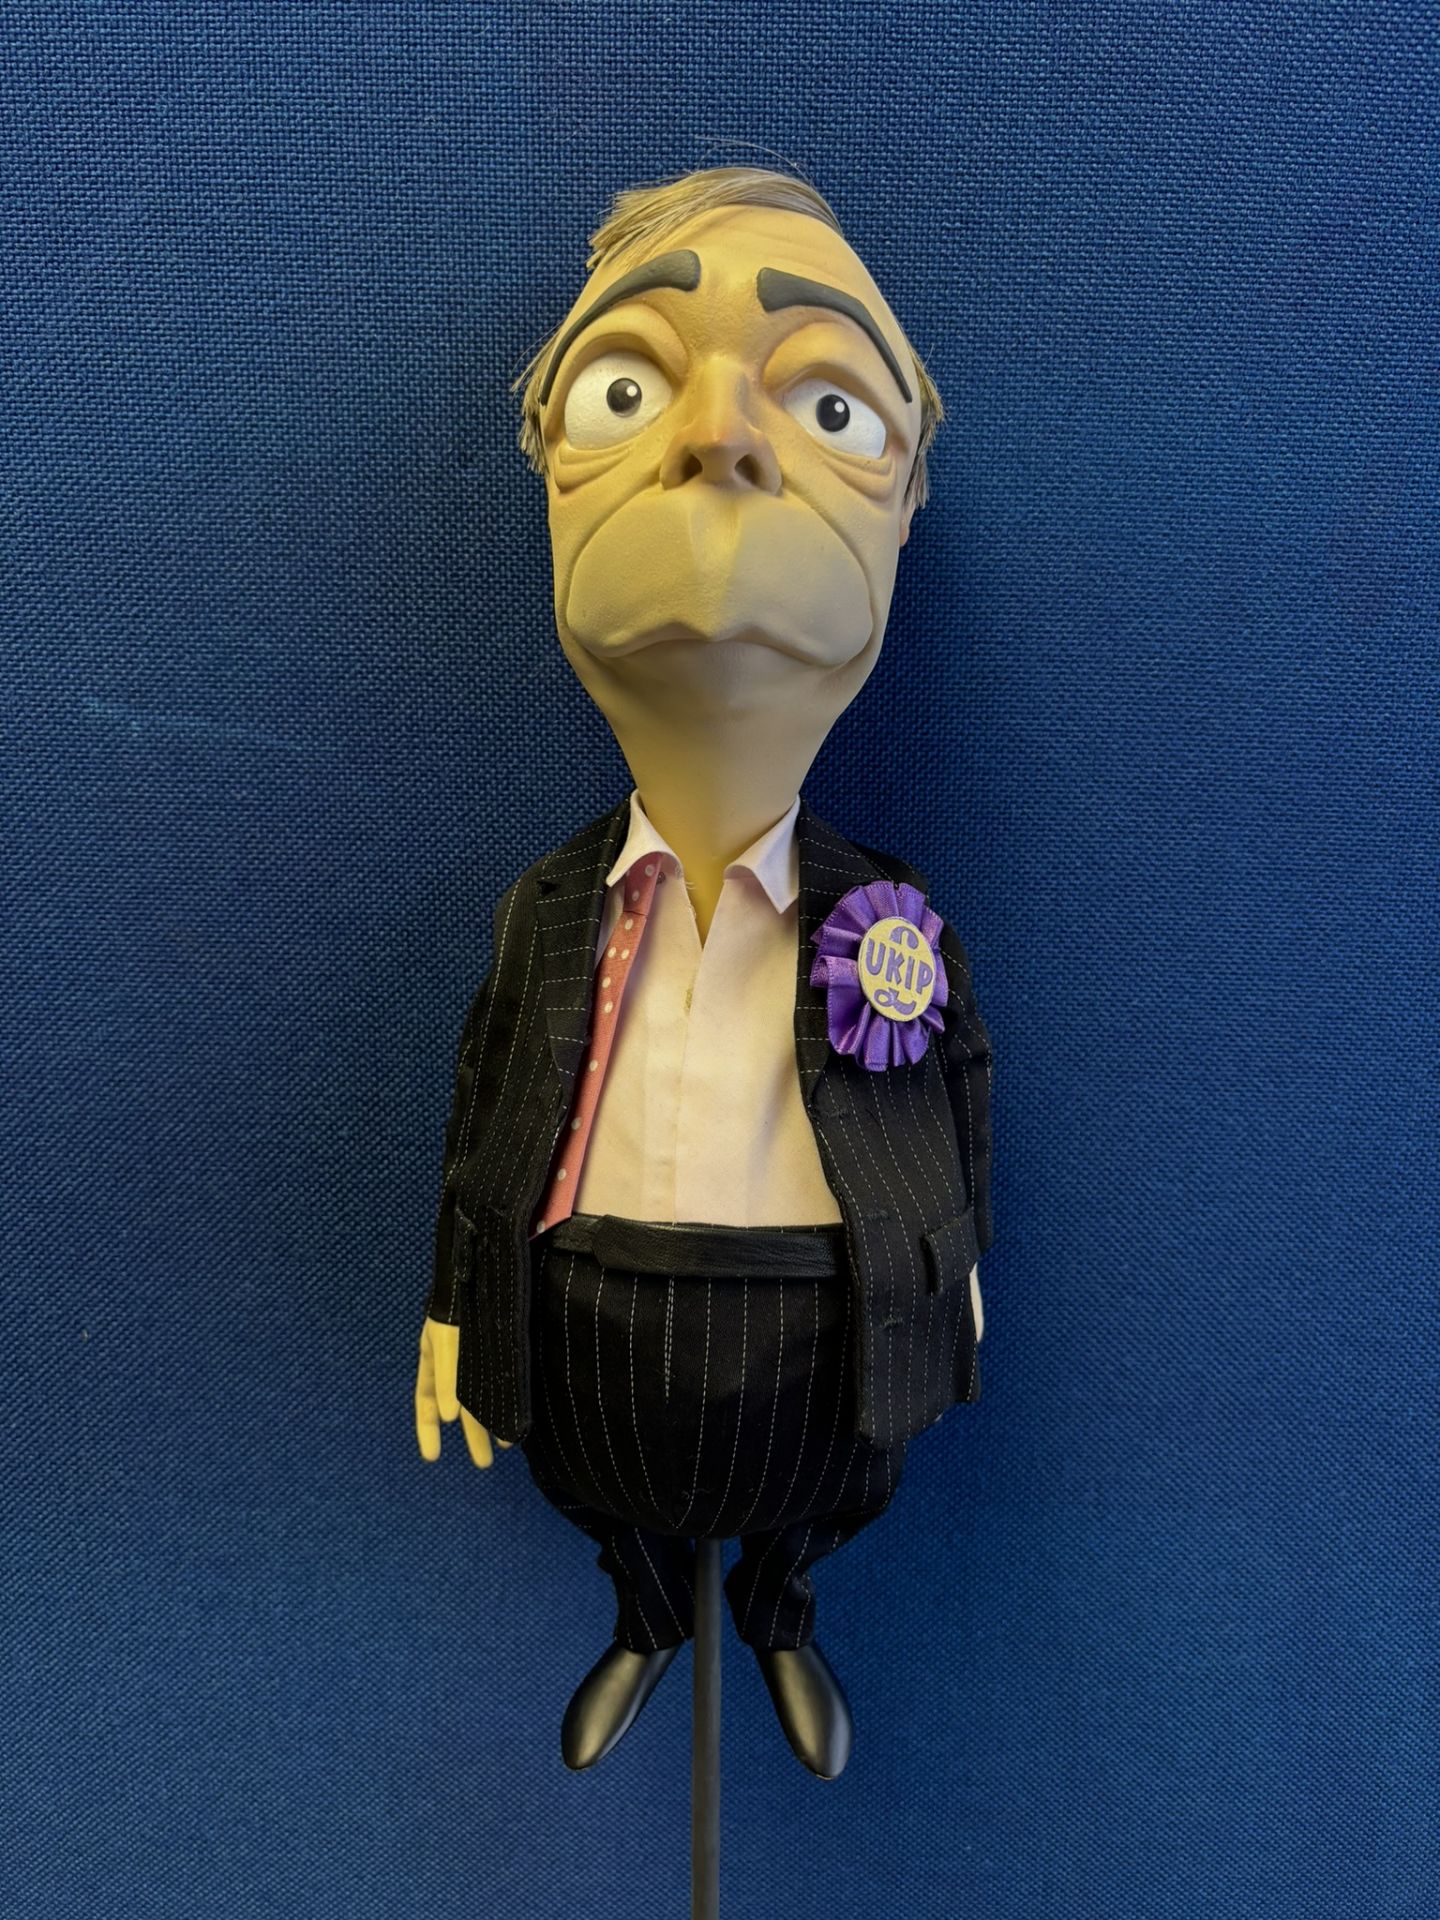 Newzoid puppet - Nigel Farage - Image 2 of 6